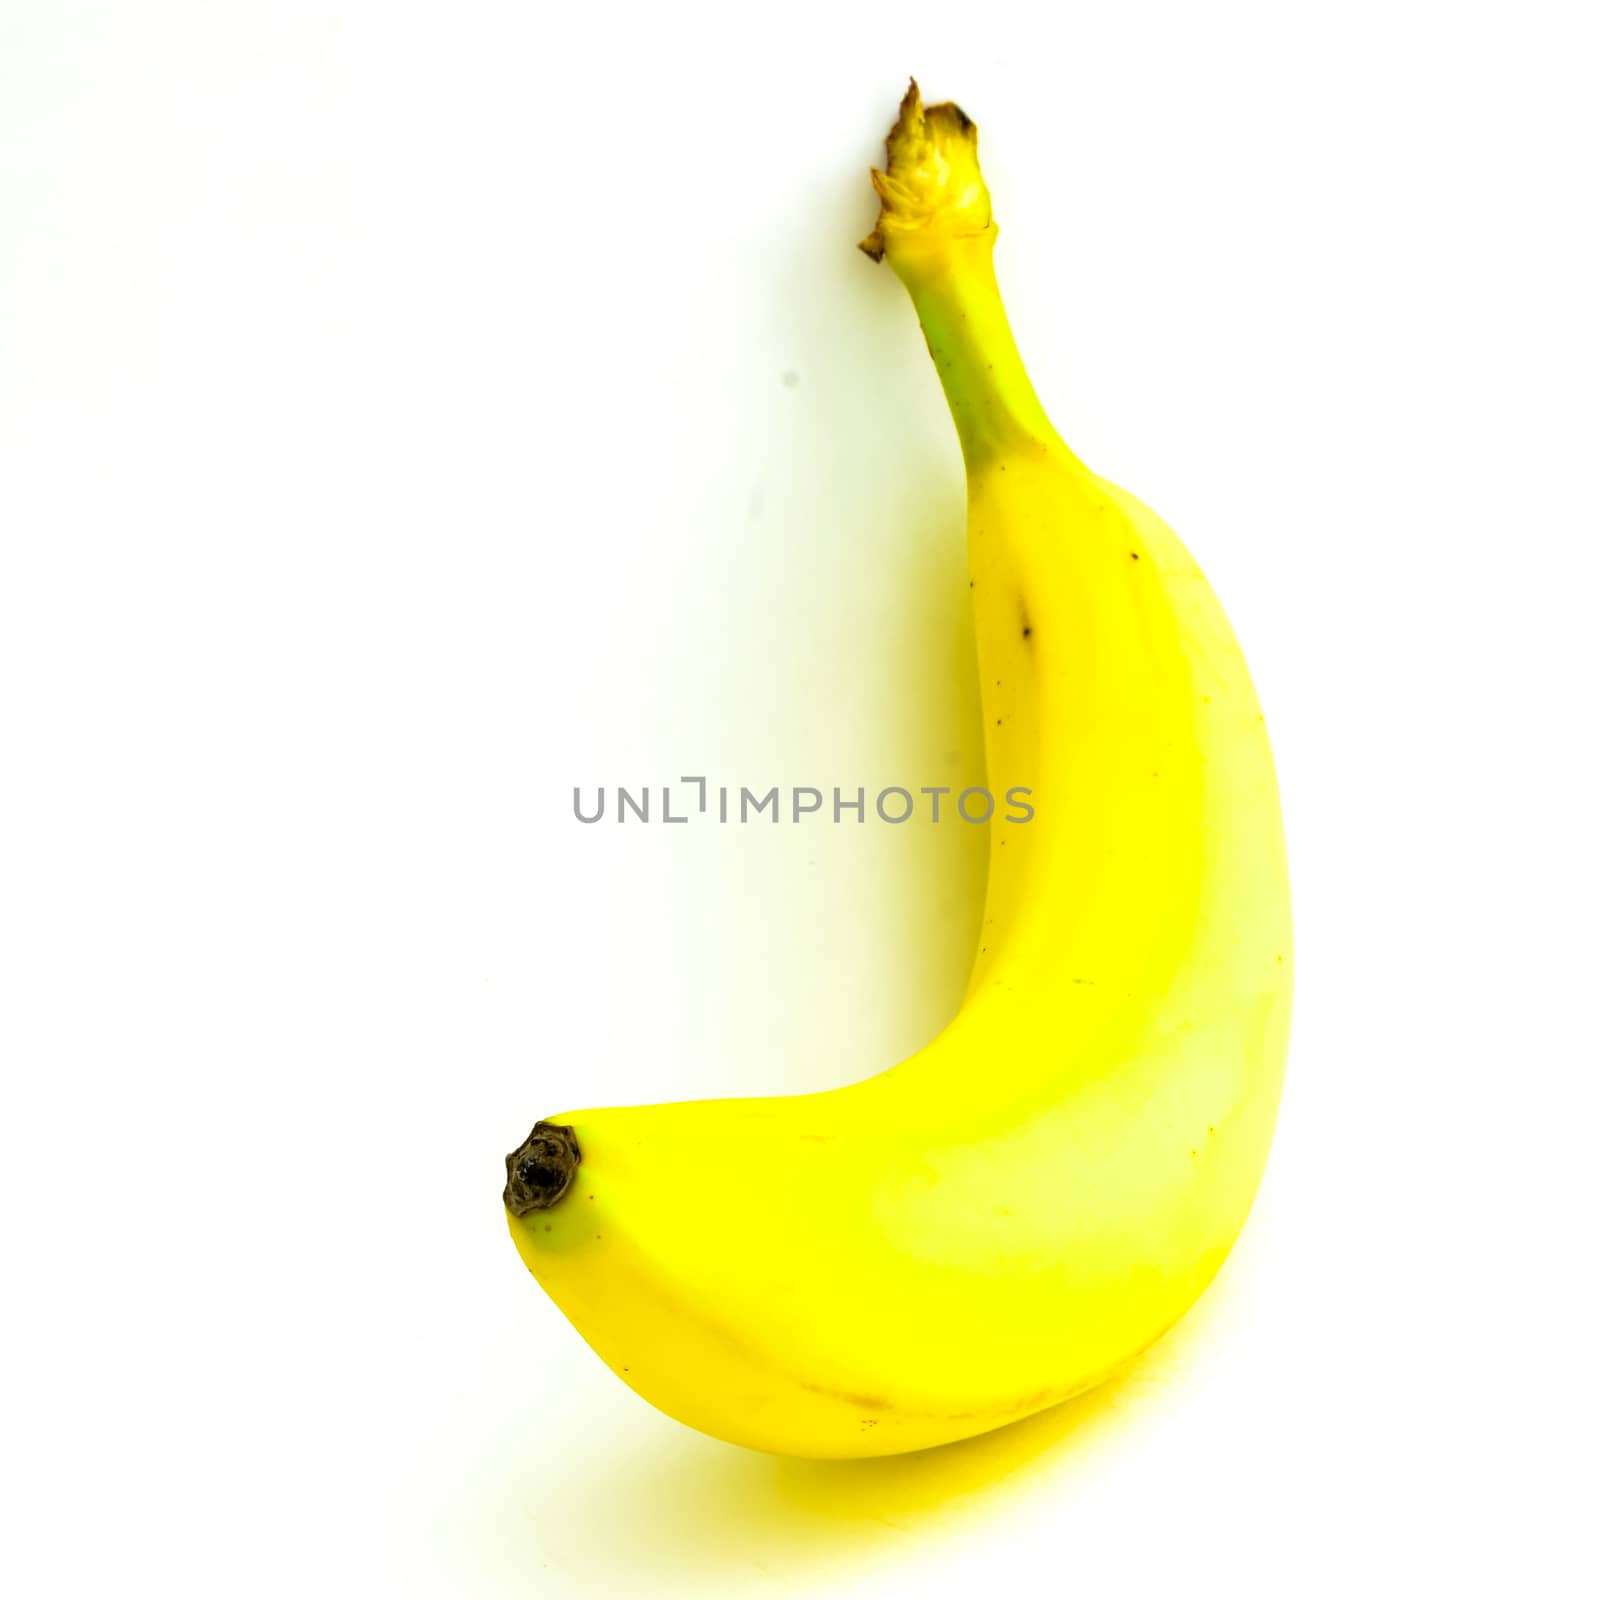 Studio shot single organic whole banana isolated on white by trongnguyen